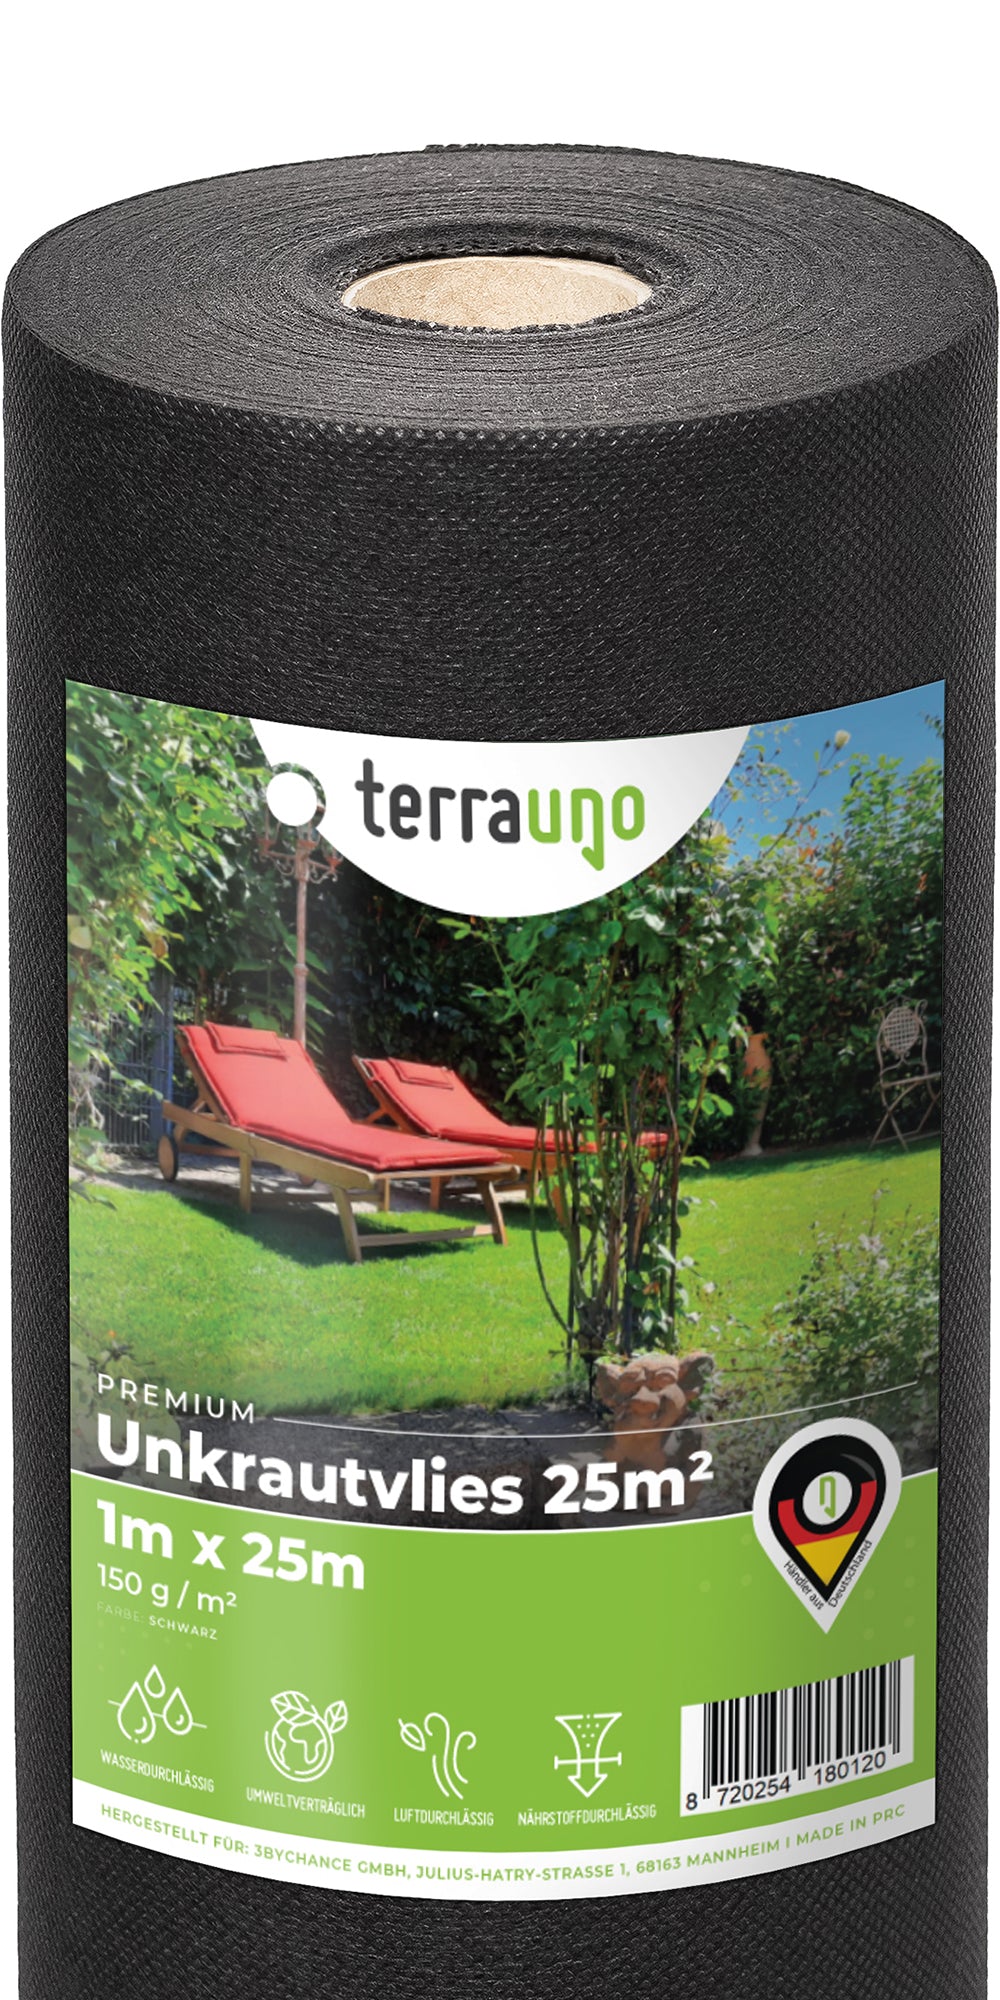 Unkrautvlies - 150 g/m²  25m x 1m   TerraUno